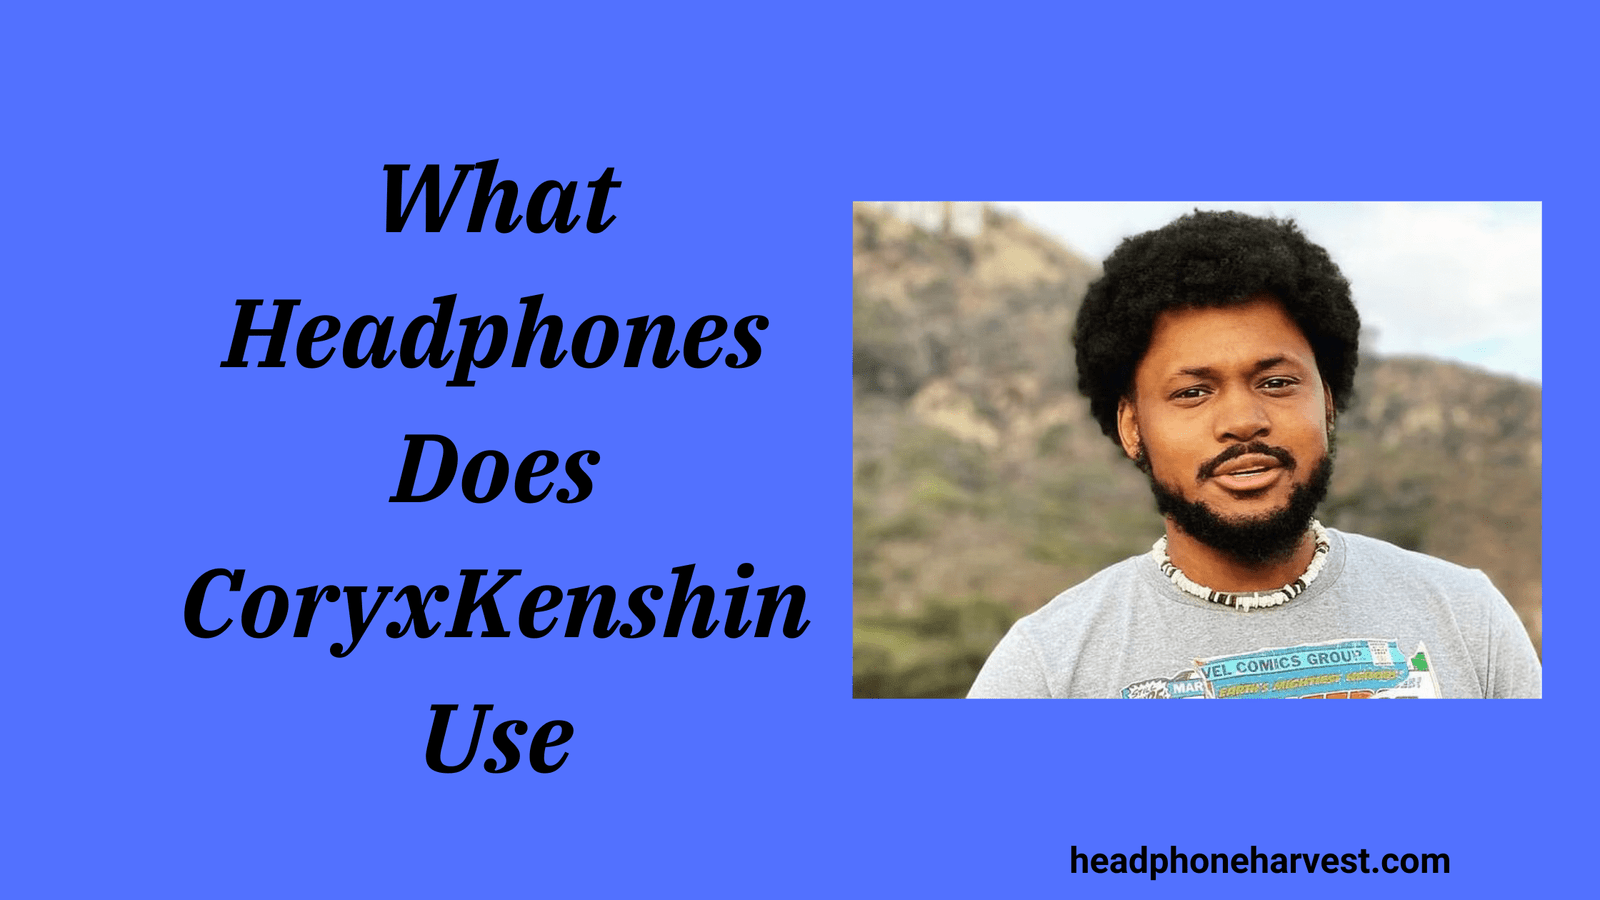 What Headphones Does CoryxKenshin Use